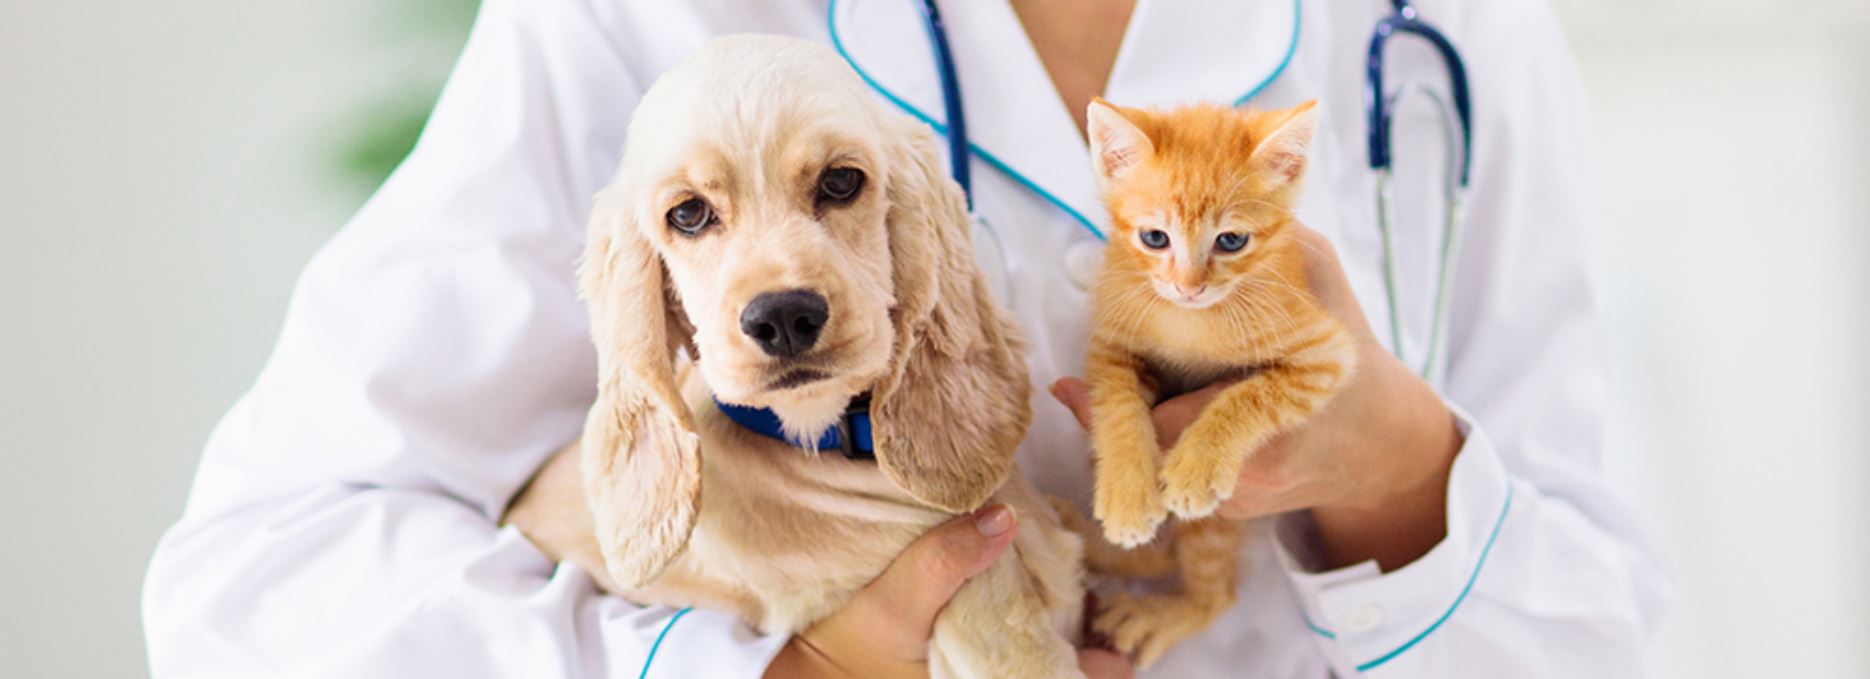 Veterinary Practices Dolgetta Law